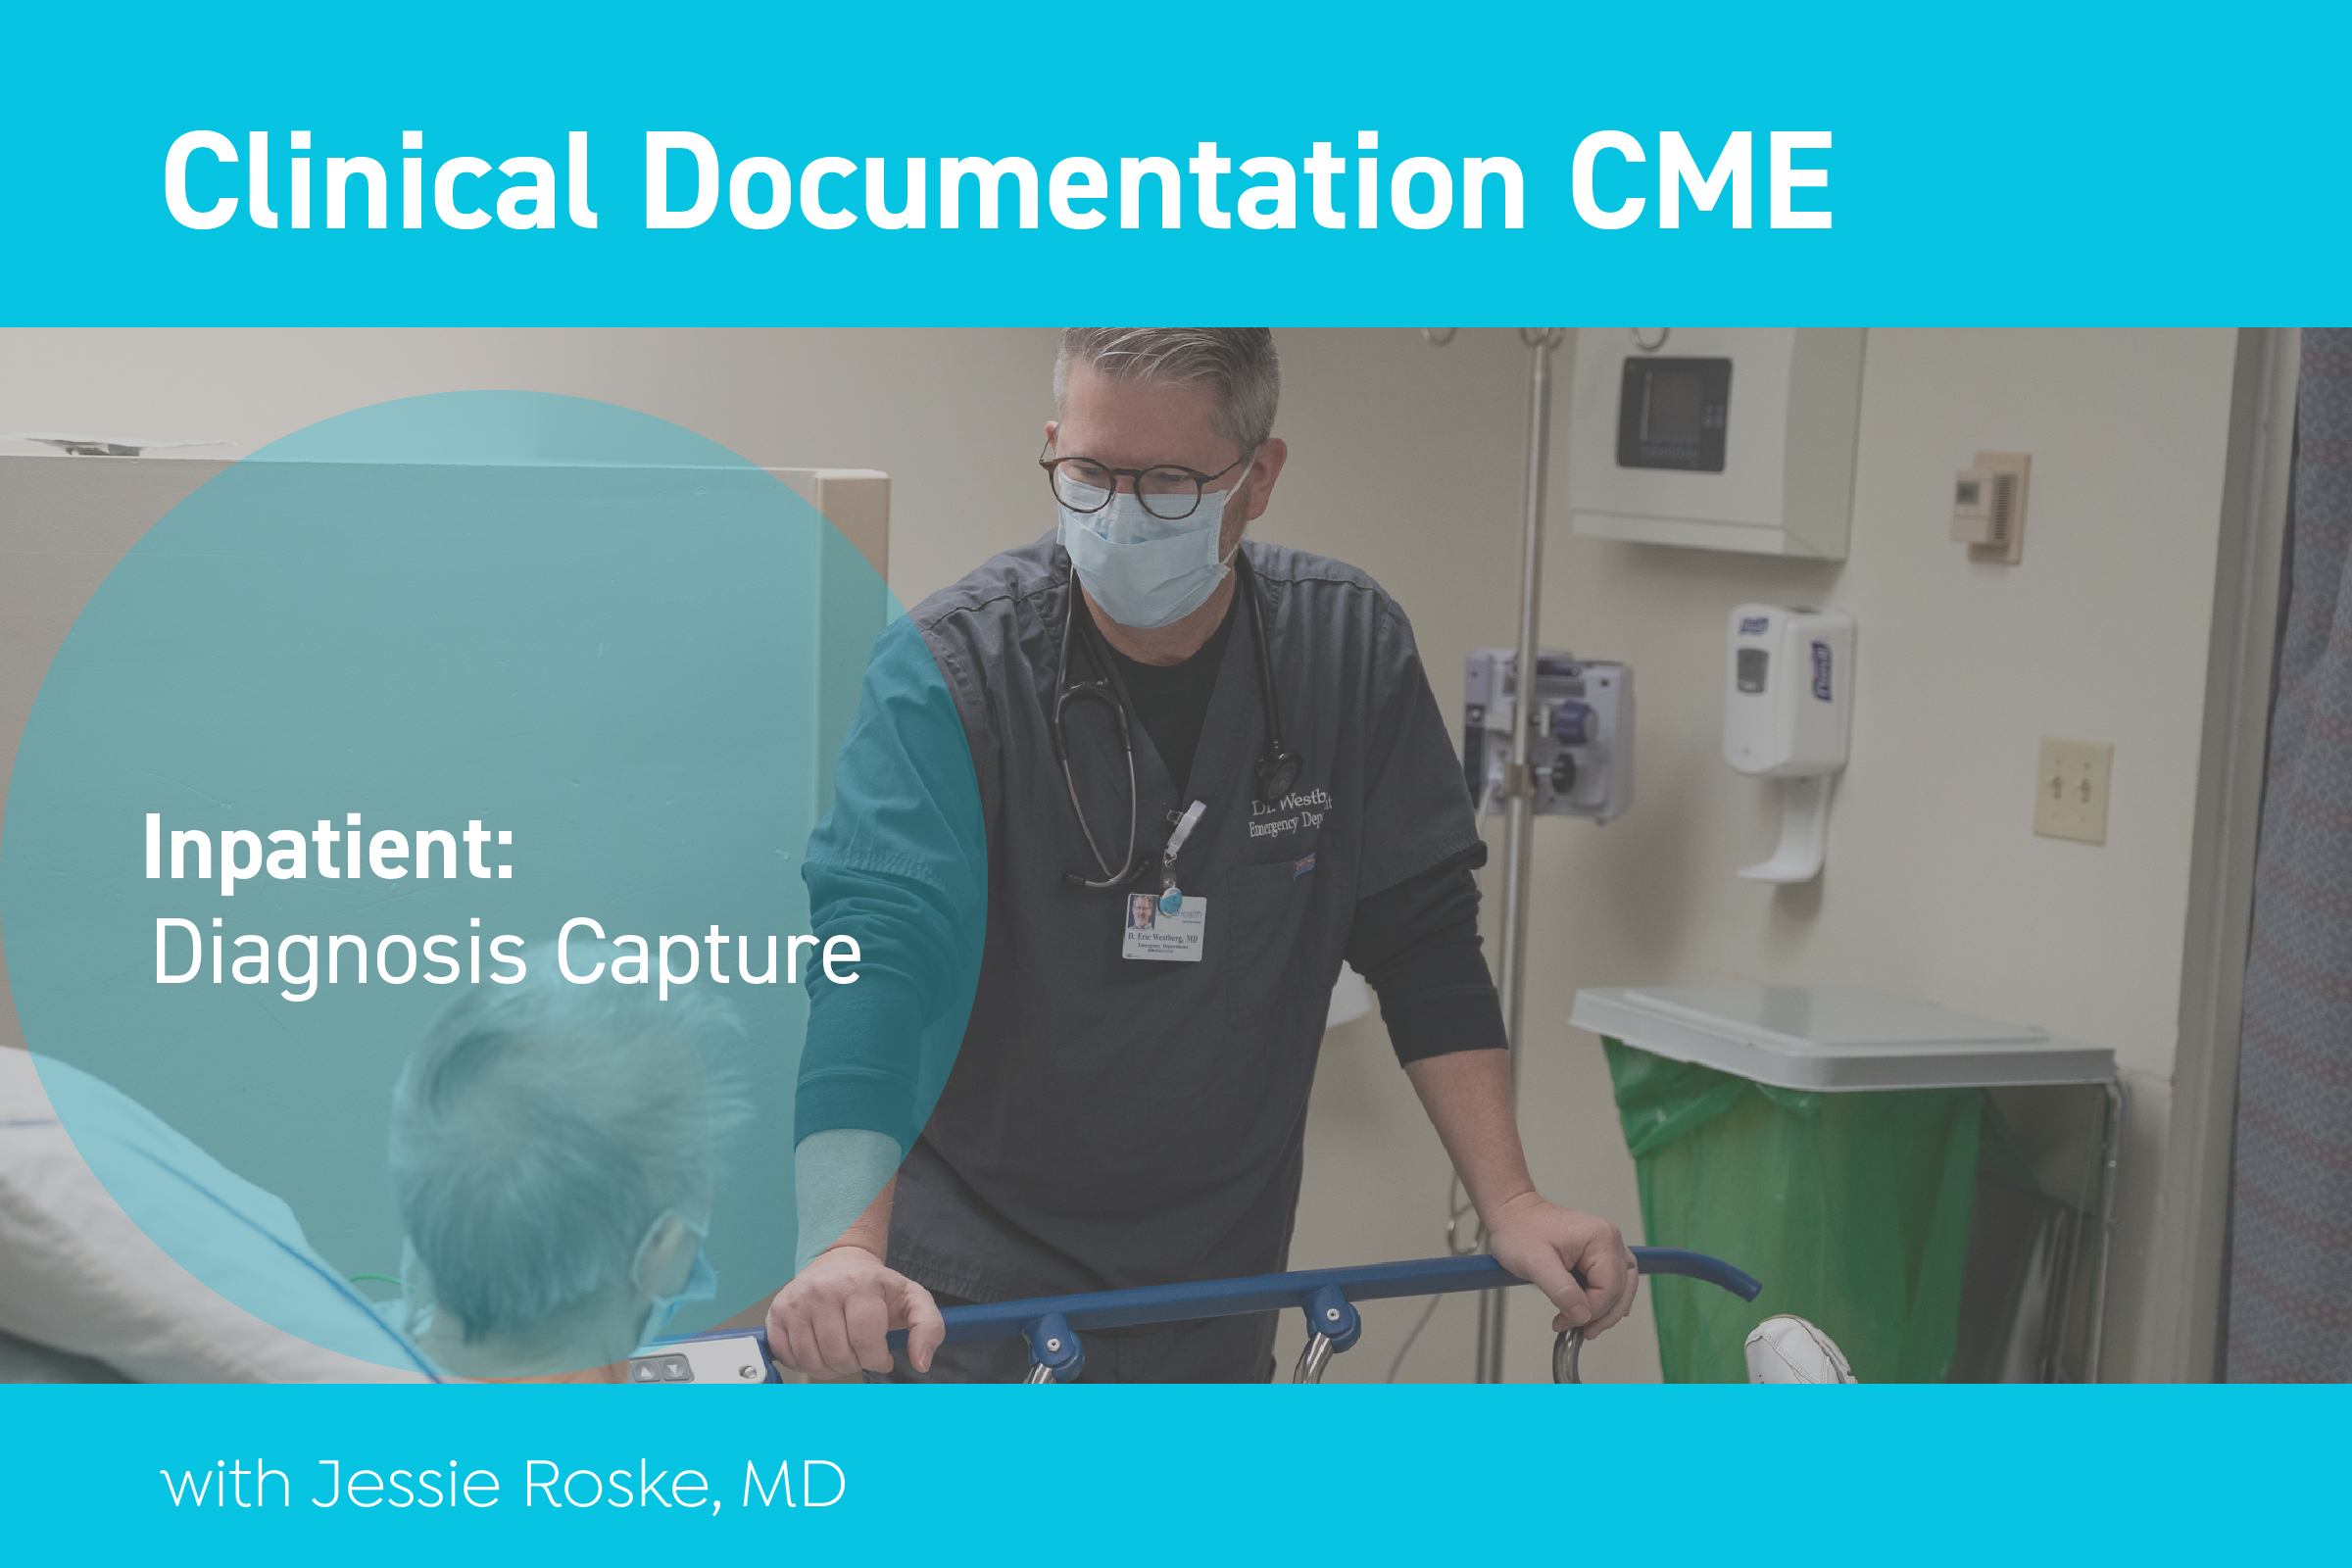 Promotion for Inpatient Diagnosis Capture Clinical Documentation CME